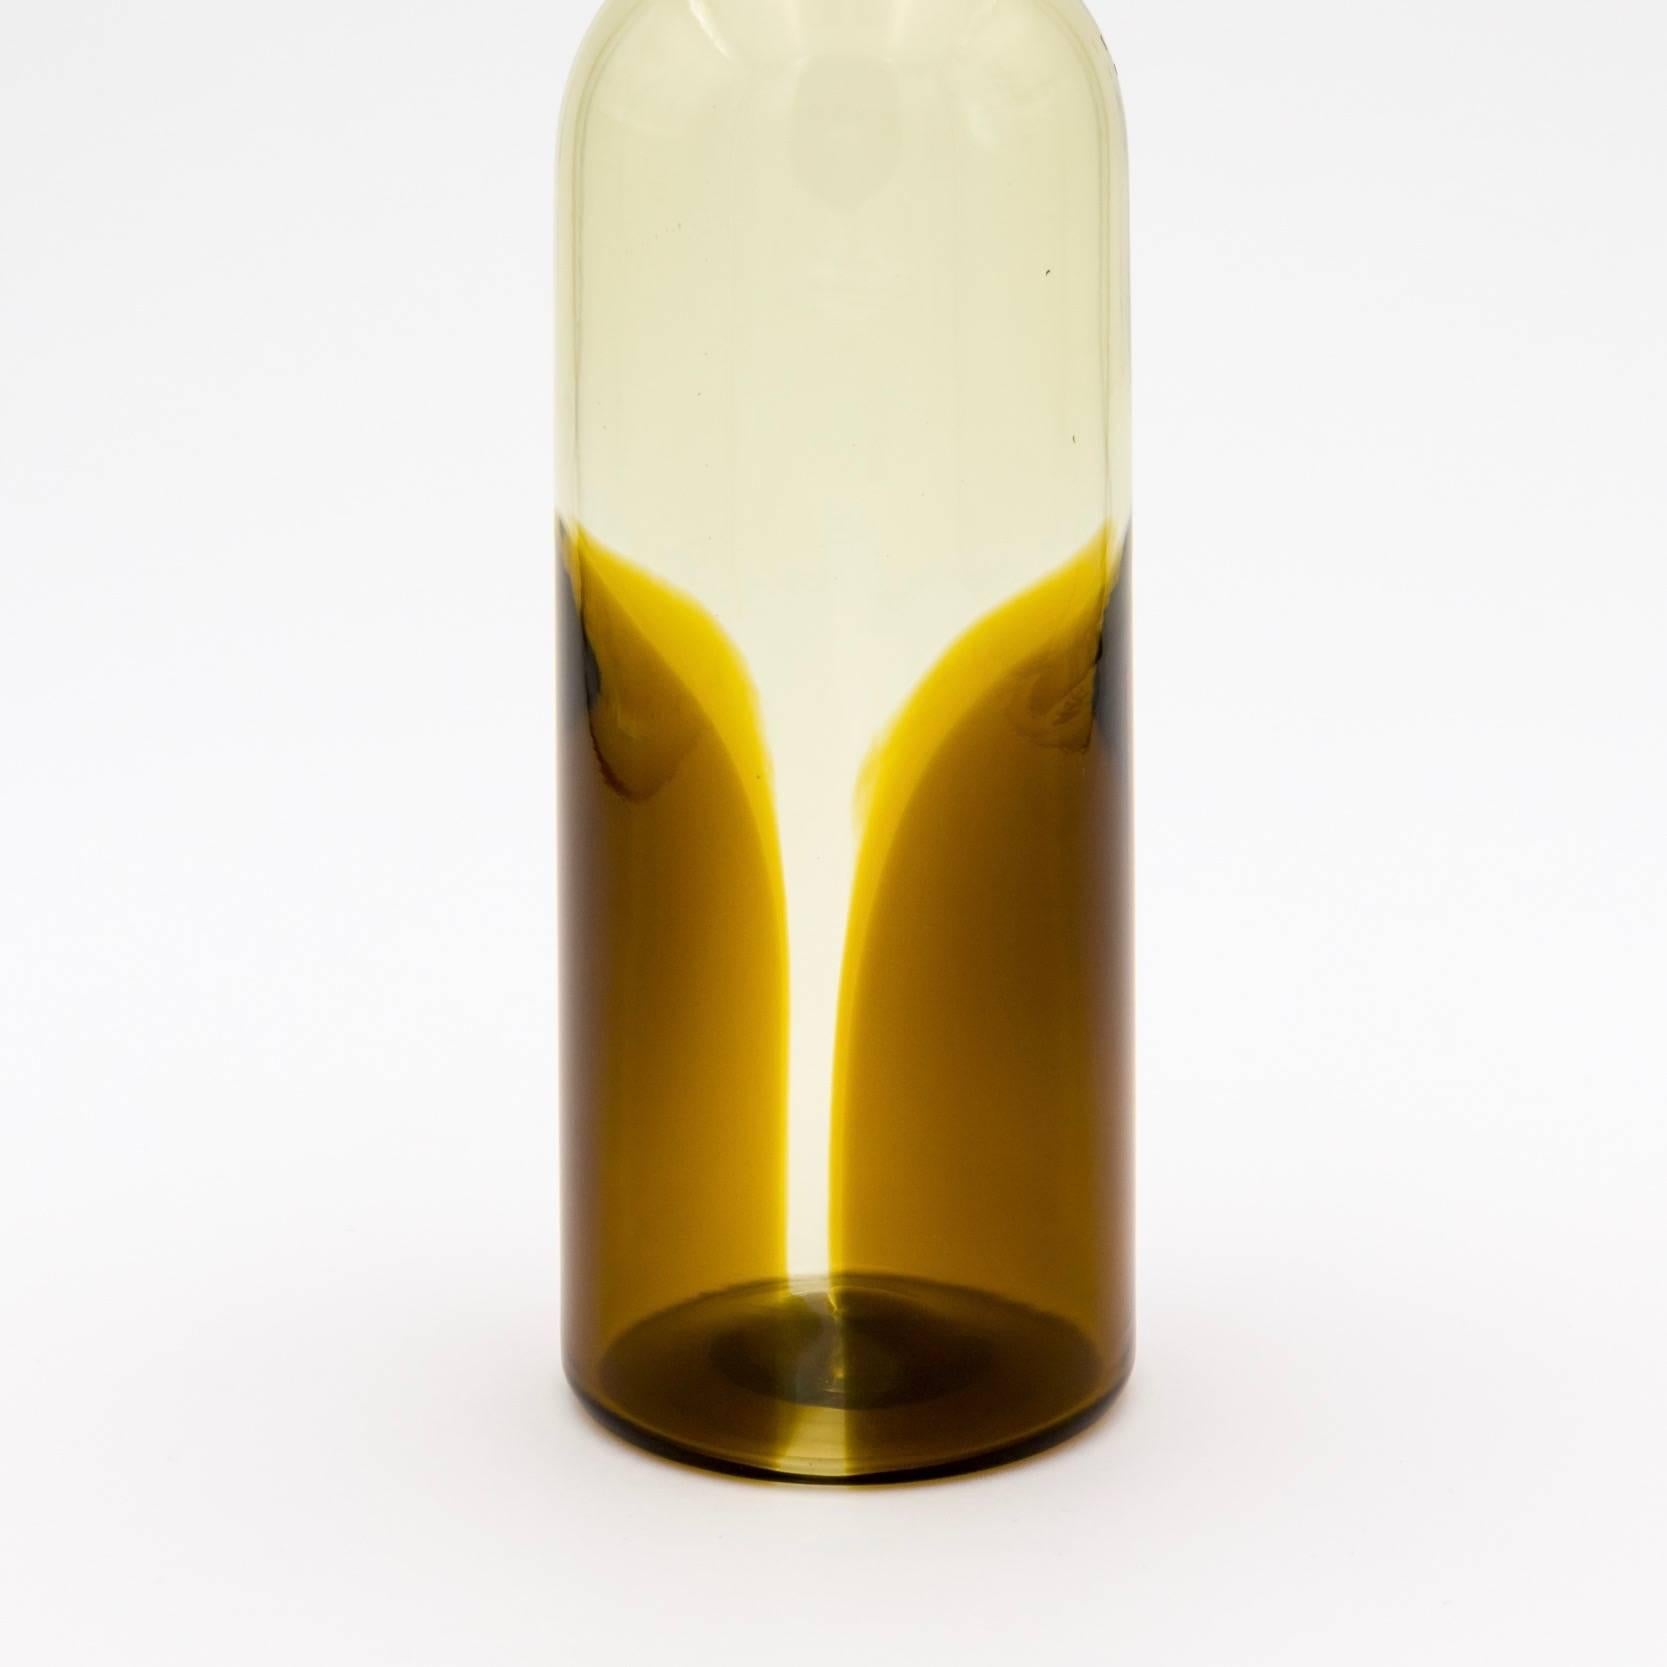 A Pavone bottle (vase).